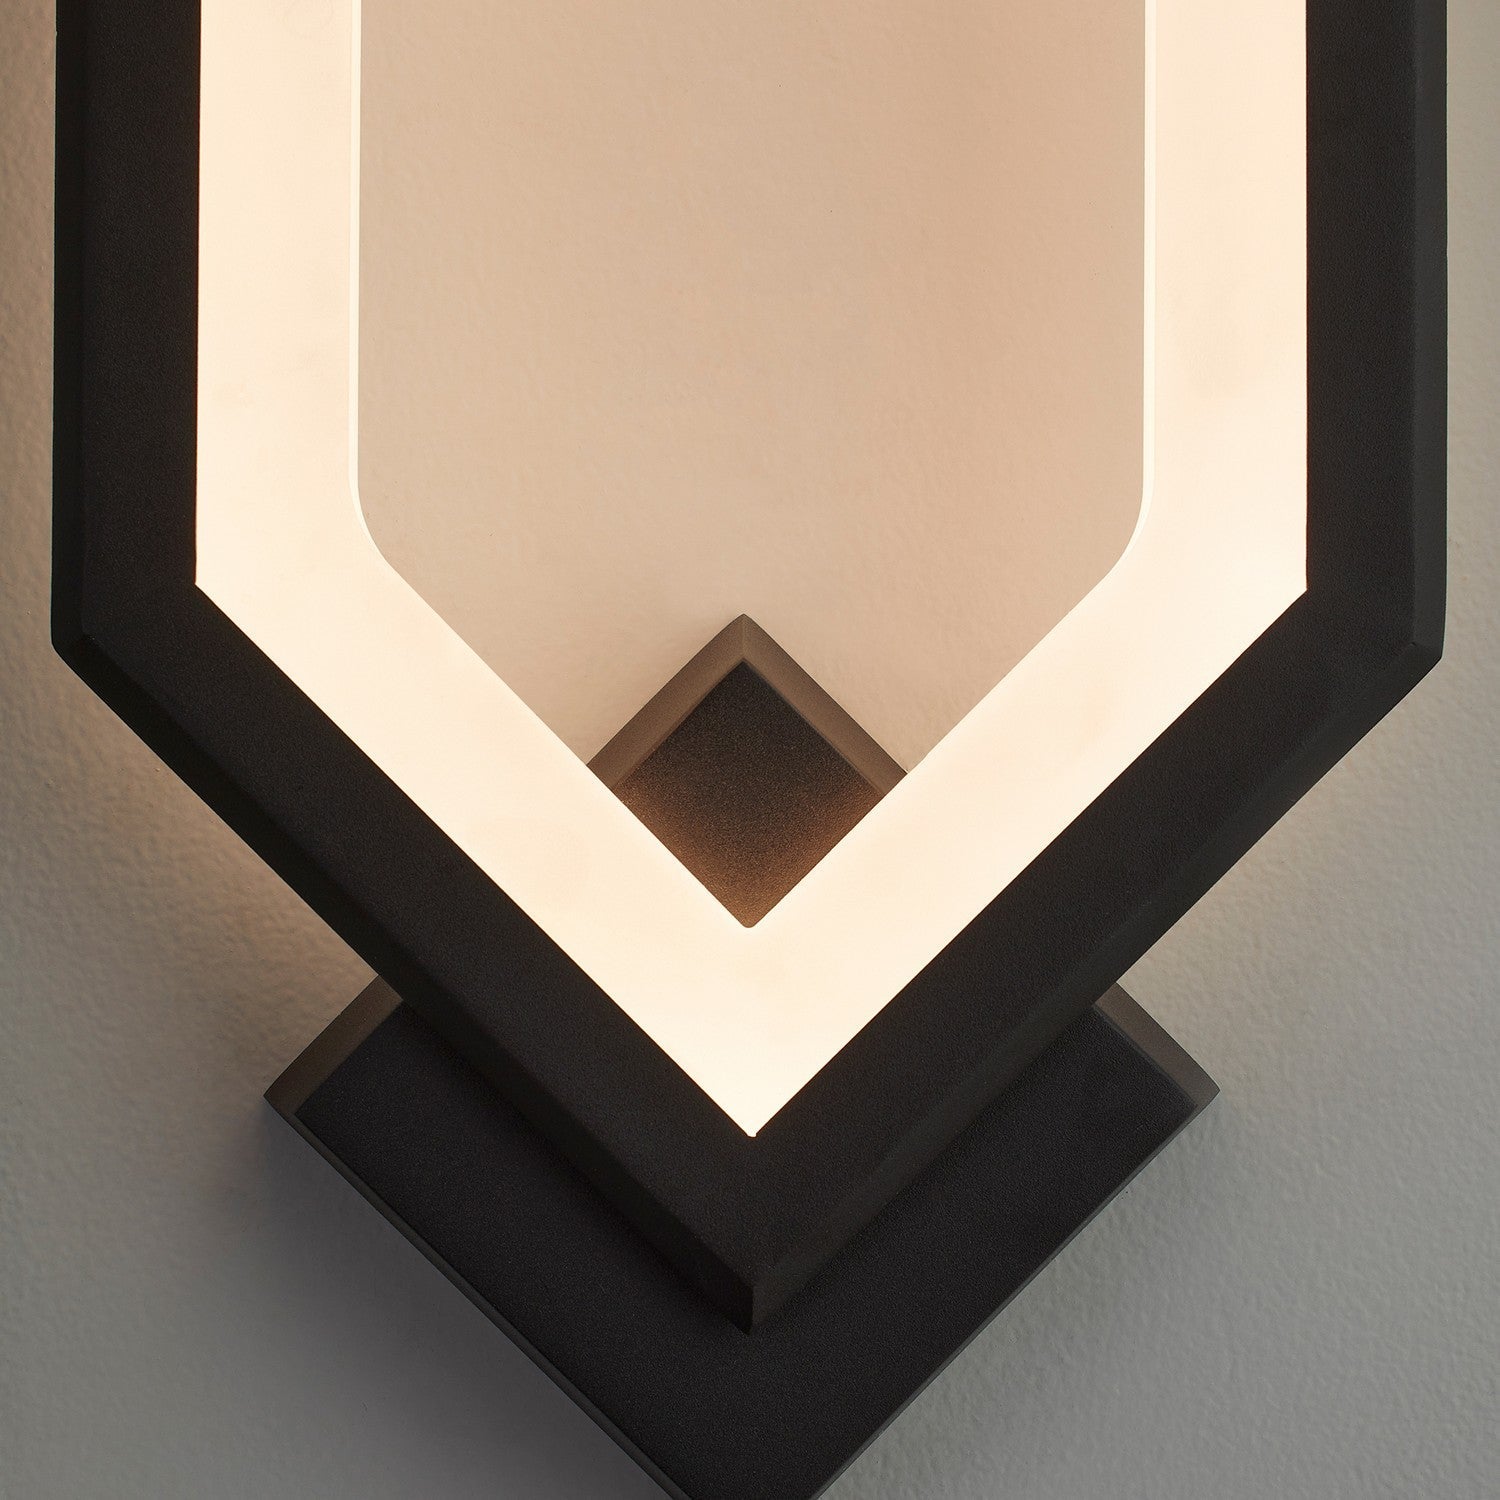 Oxygen Aegis 3-59-15 Contemporary Modern LED Wall Sconce Light - Black